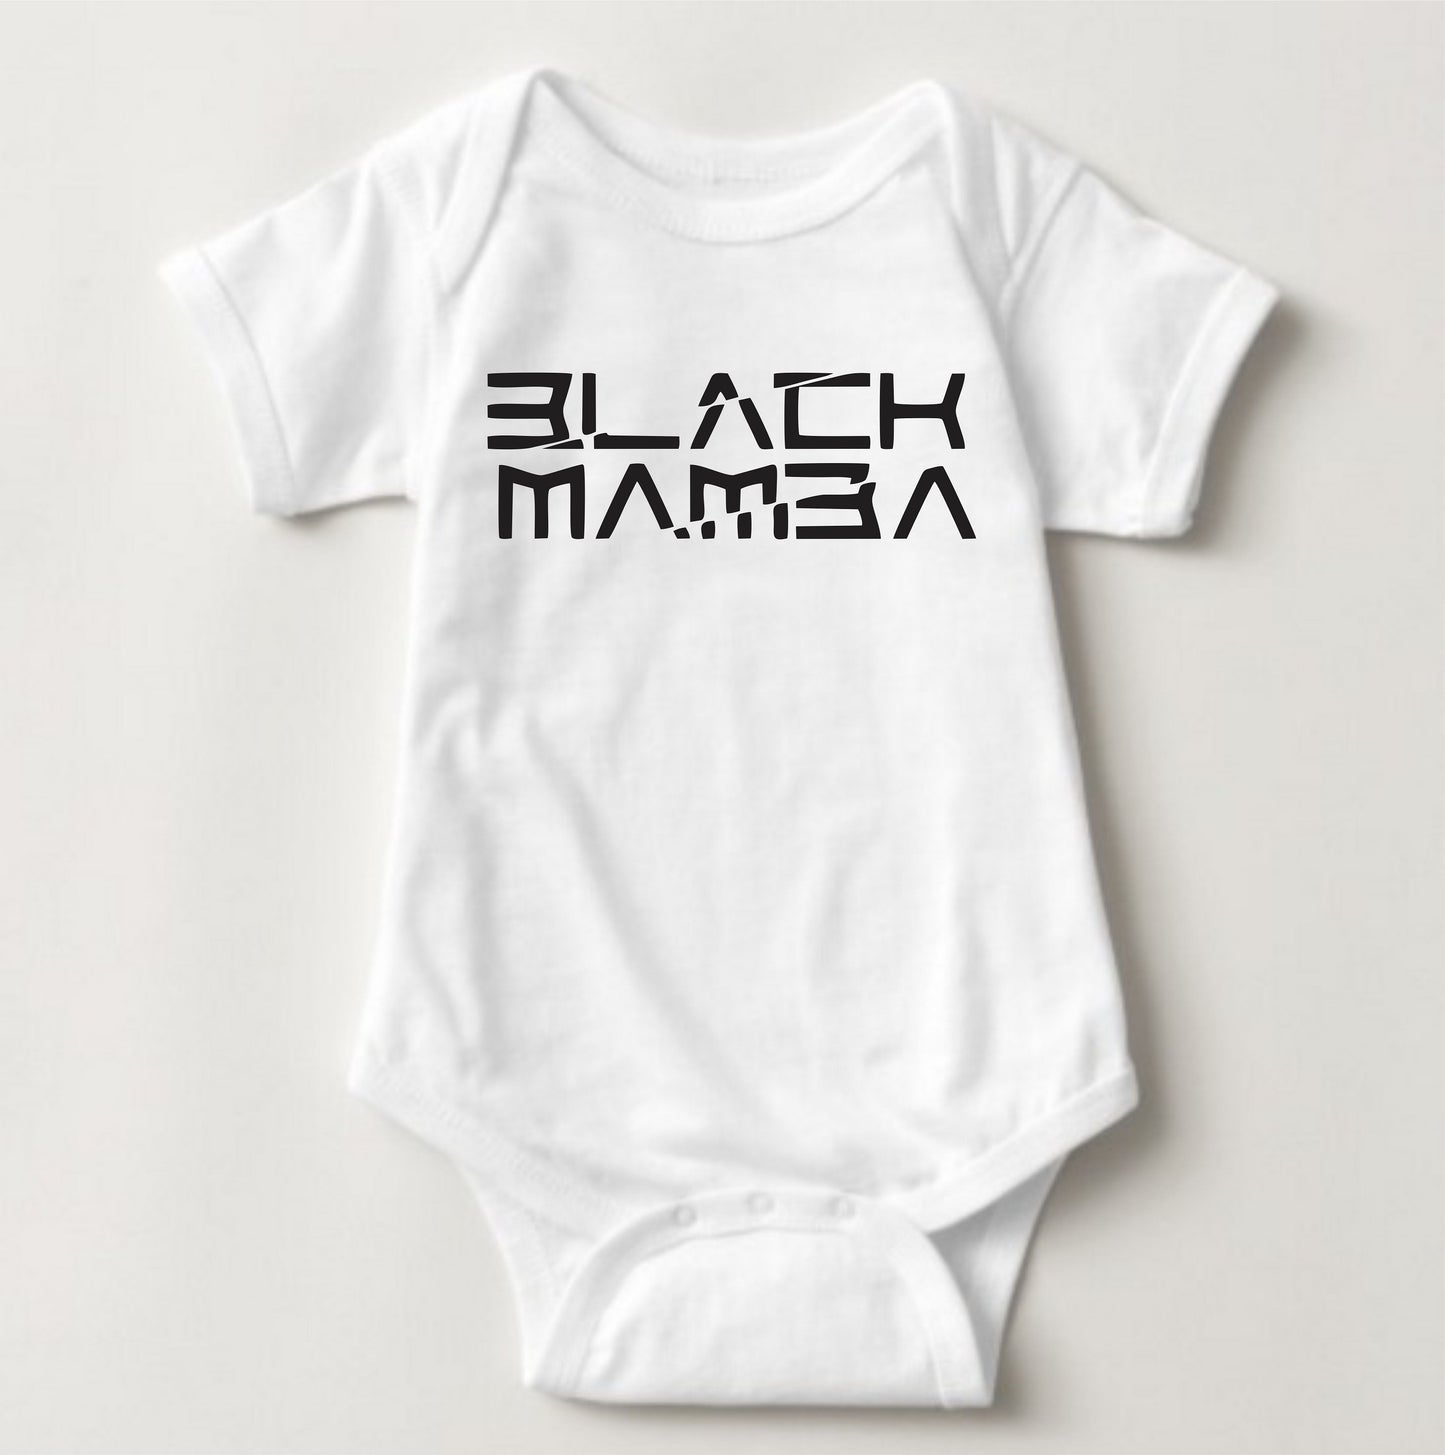 Baby Statement Onesies - Black Mamba (White) - MYSTYLEMYCLOTHING